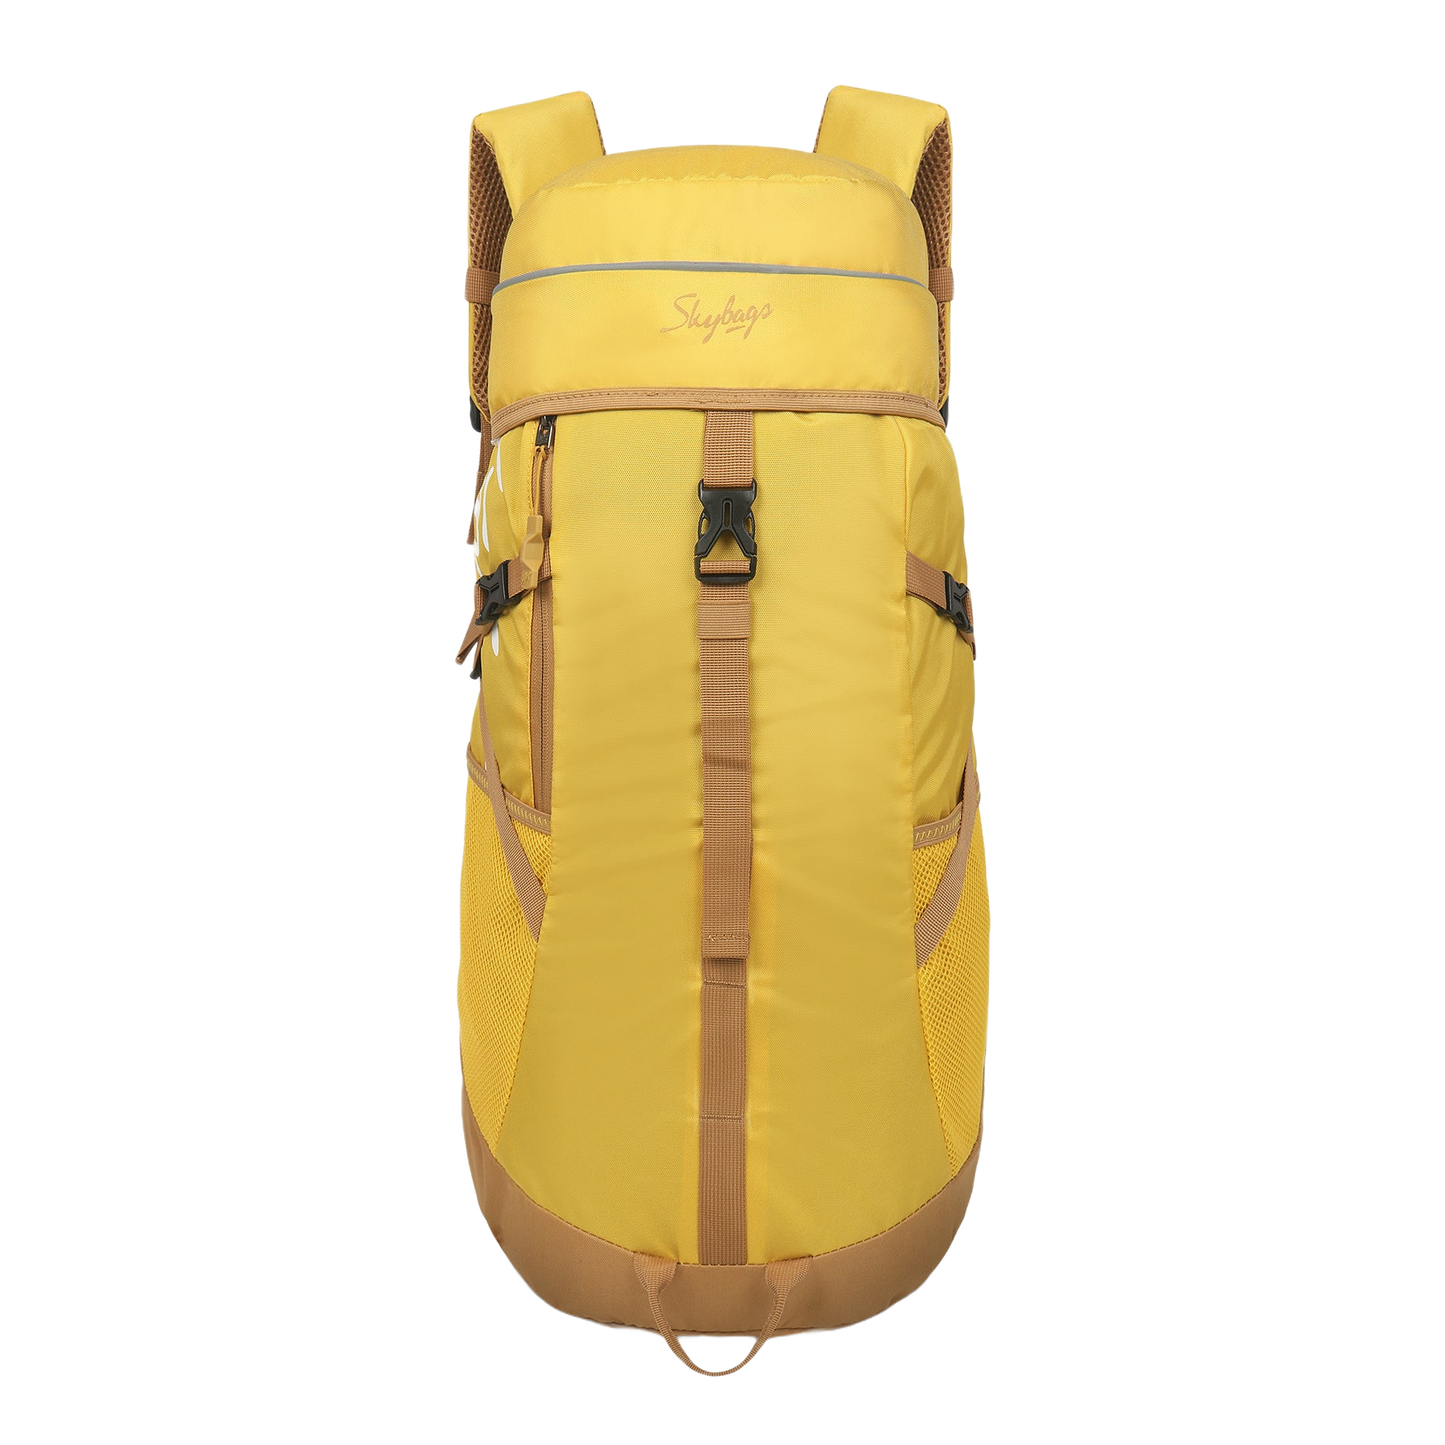 Skybags Mount Rucksack 45L Mustard